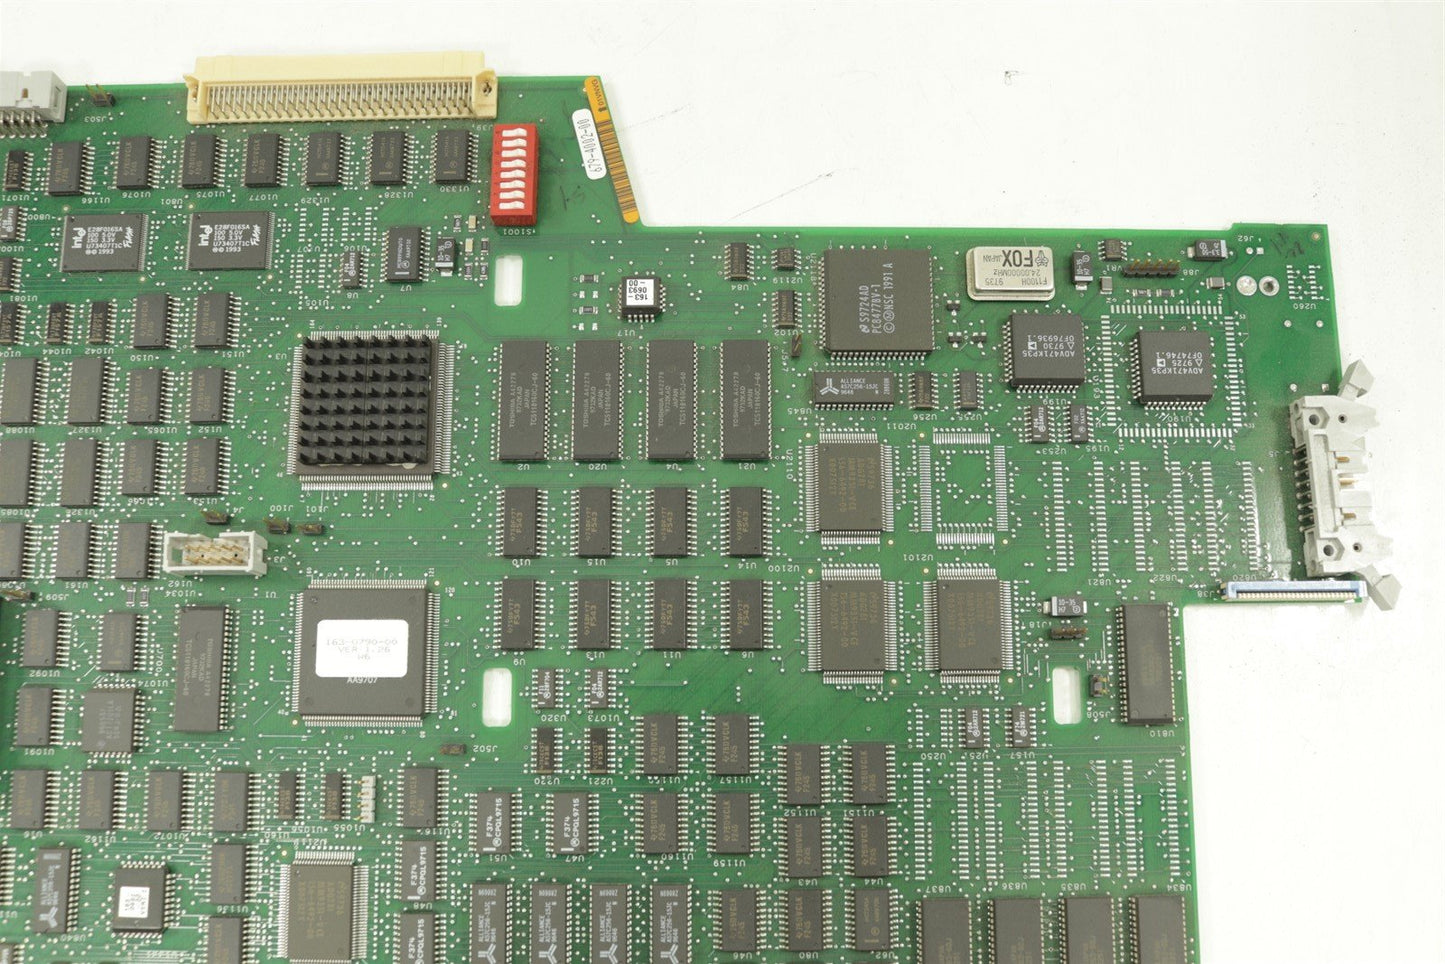 Tektronix TDS 520C Oscilloscope Motherboard PCB 679-4002-00